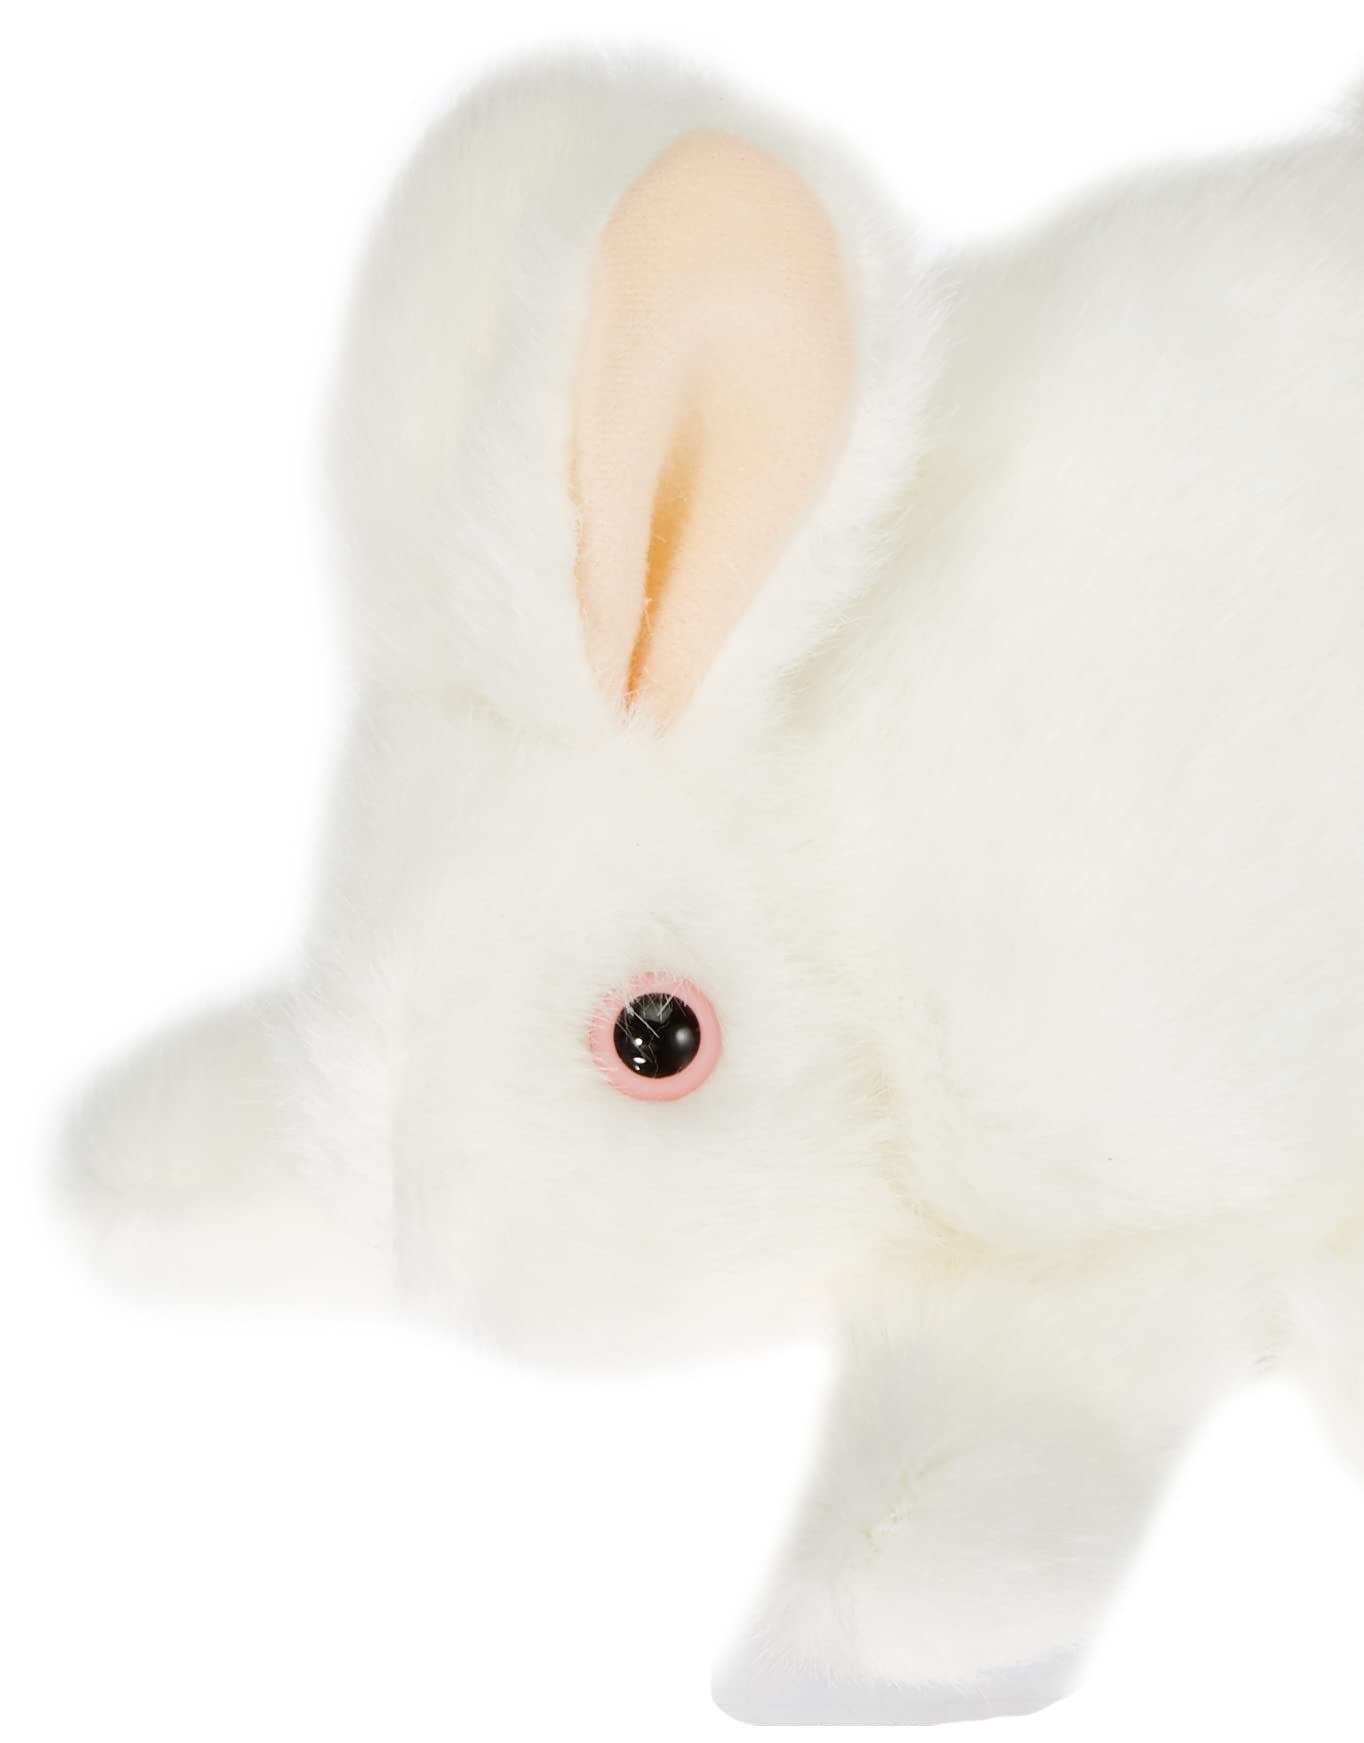 Folkmanis White Bunny Rabbit Hand Puppet